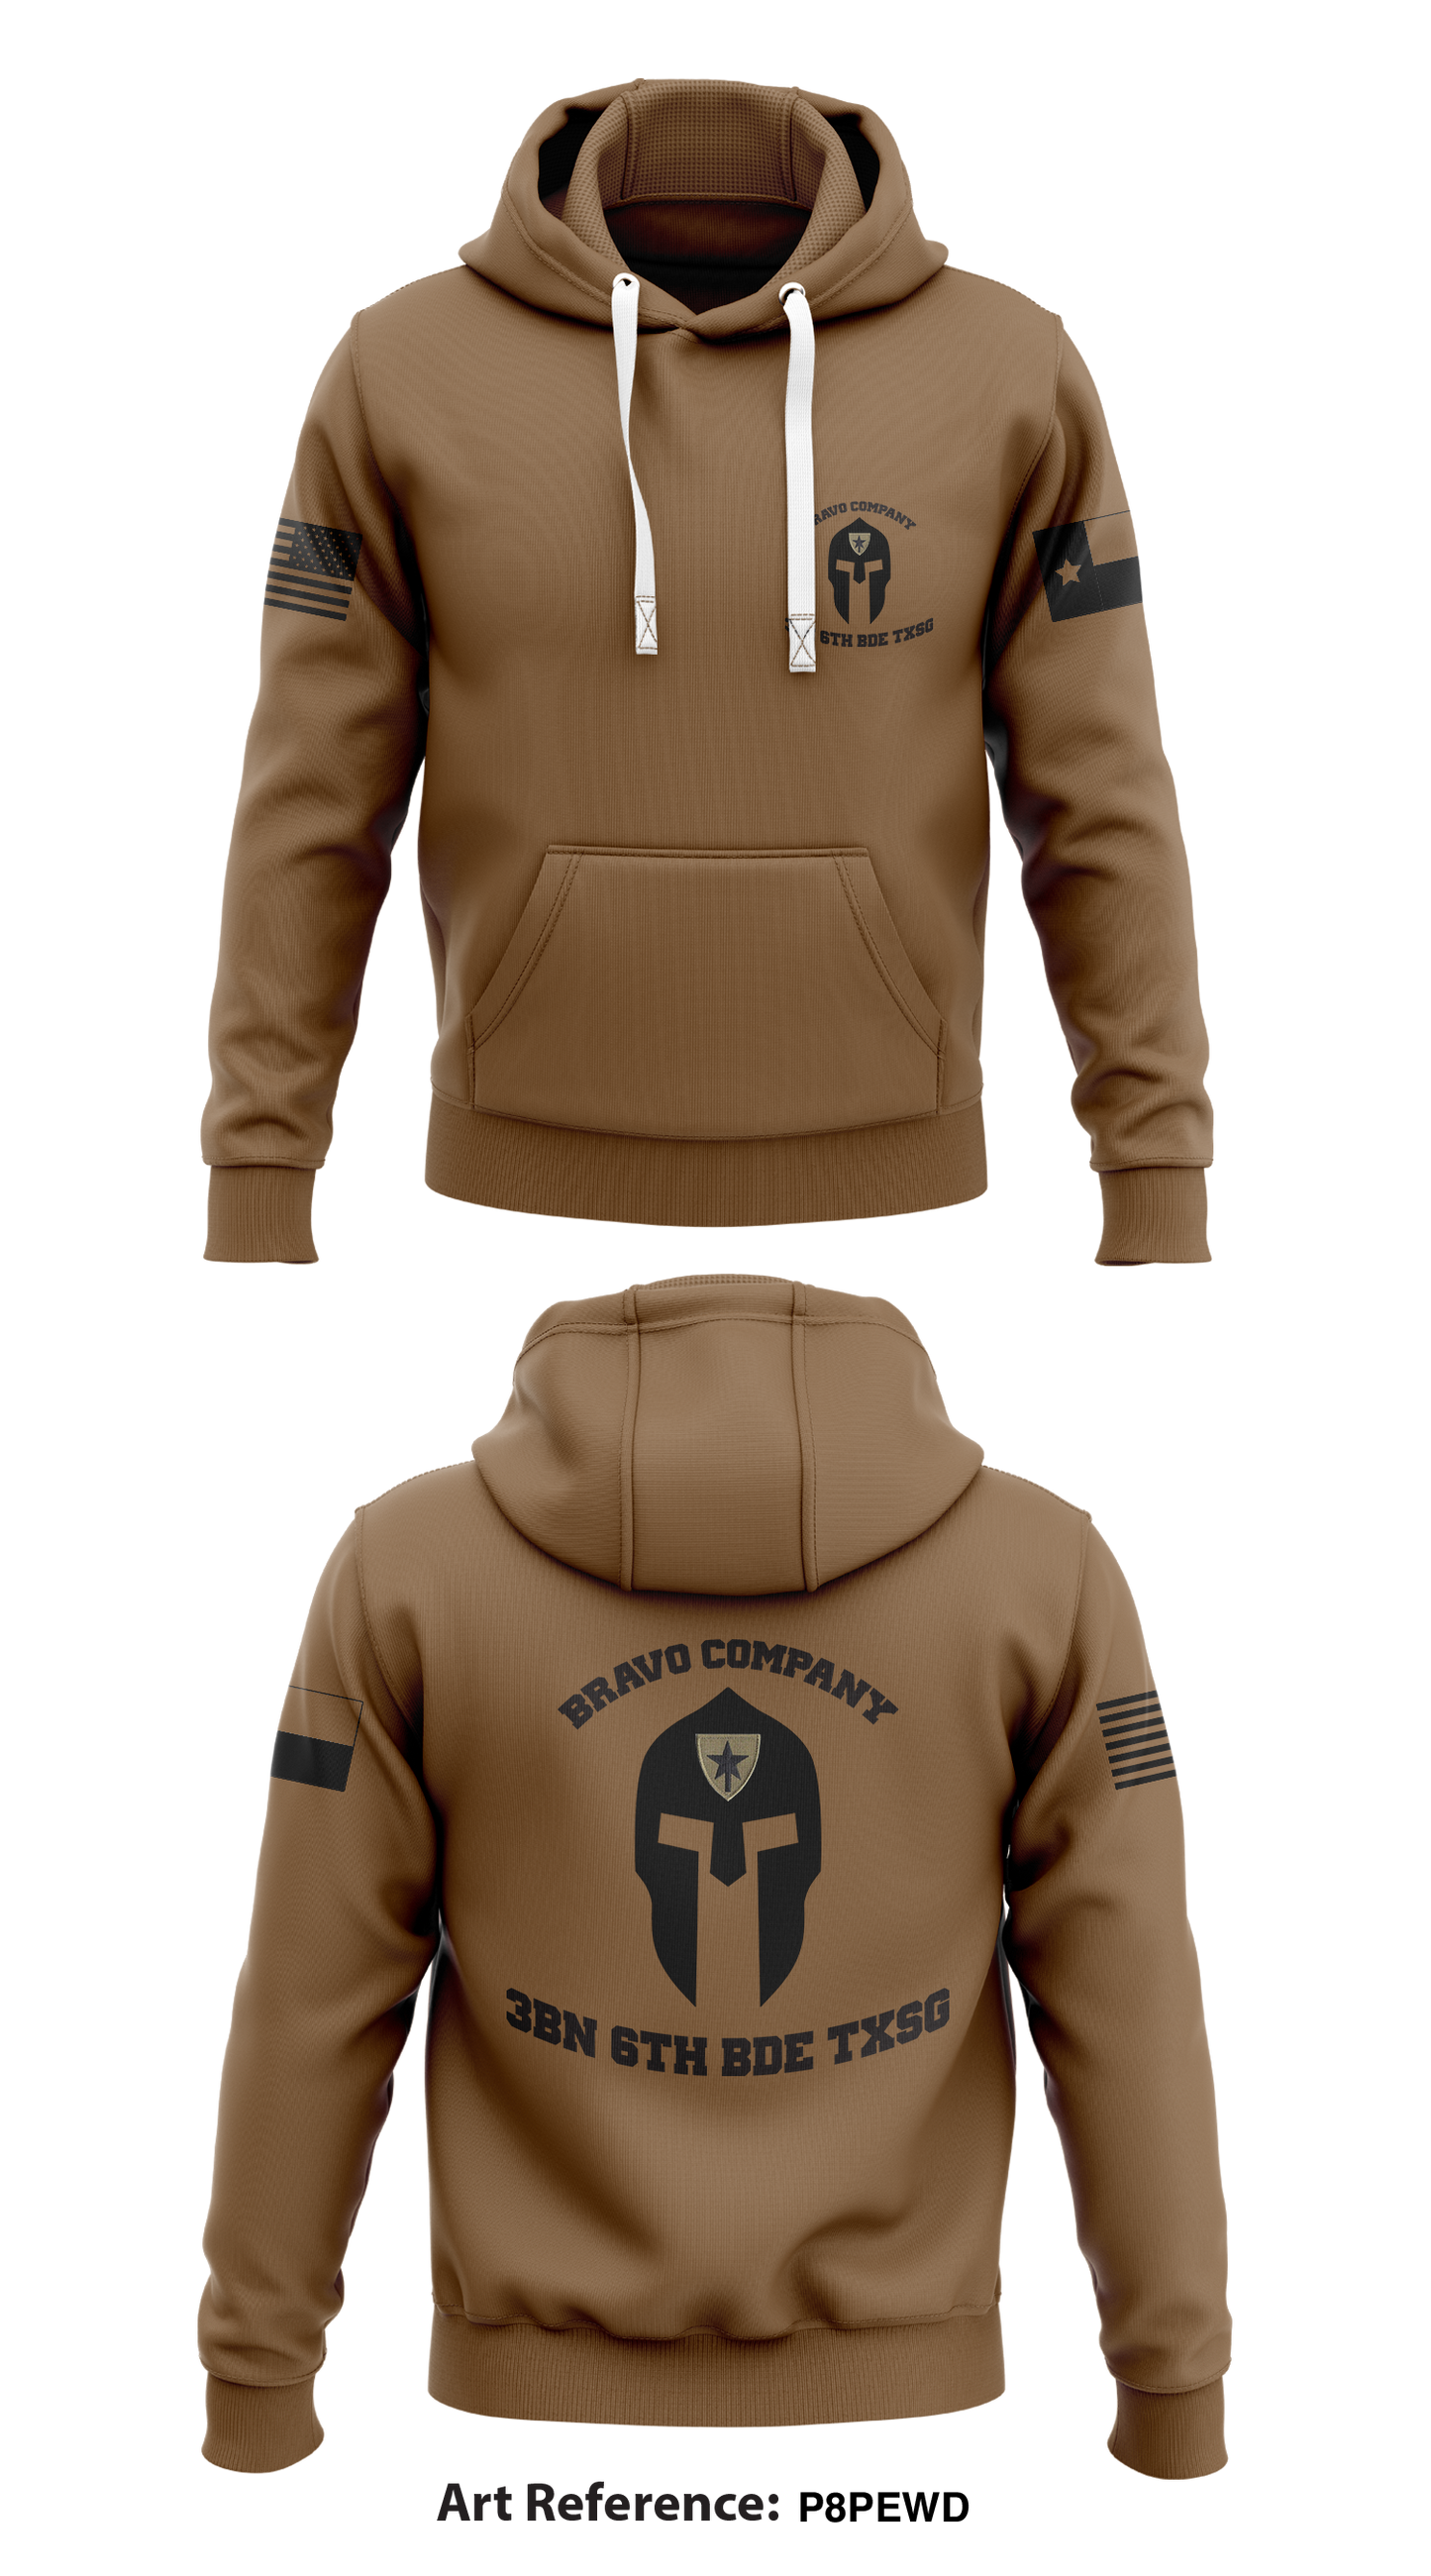 Bravo Company 3BN 6th BDE TXSG  Store 1  Core Men's Hooded Performance Sweatshirt - p8PEwd